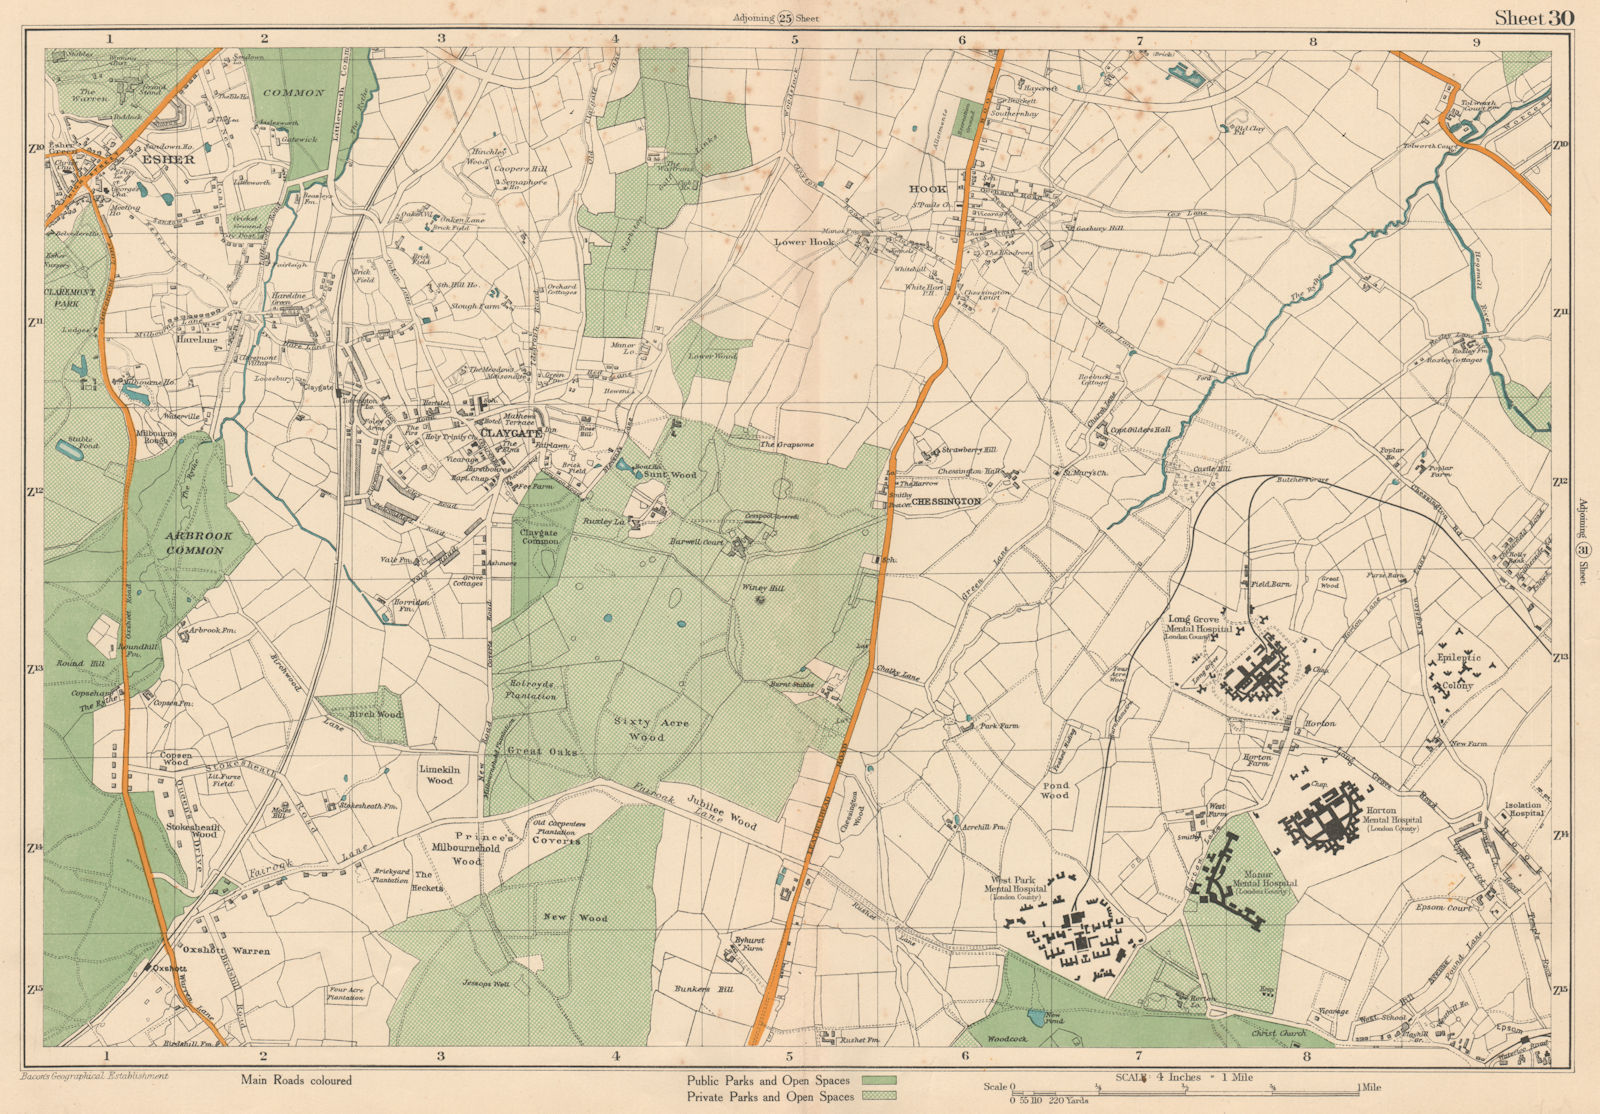 ESHER/EWELL Epsom Claygate Oxshott Hook Chessington Hinchley Wood.BACON 1927 map